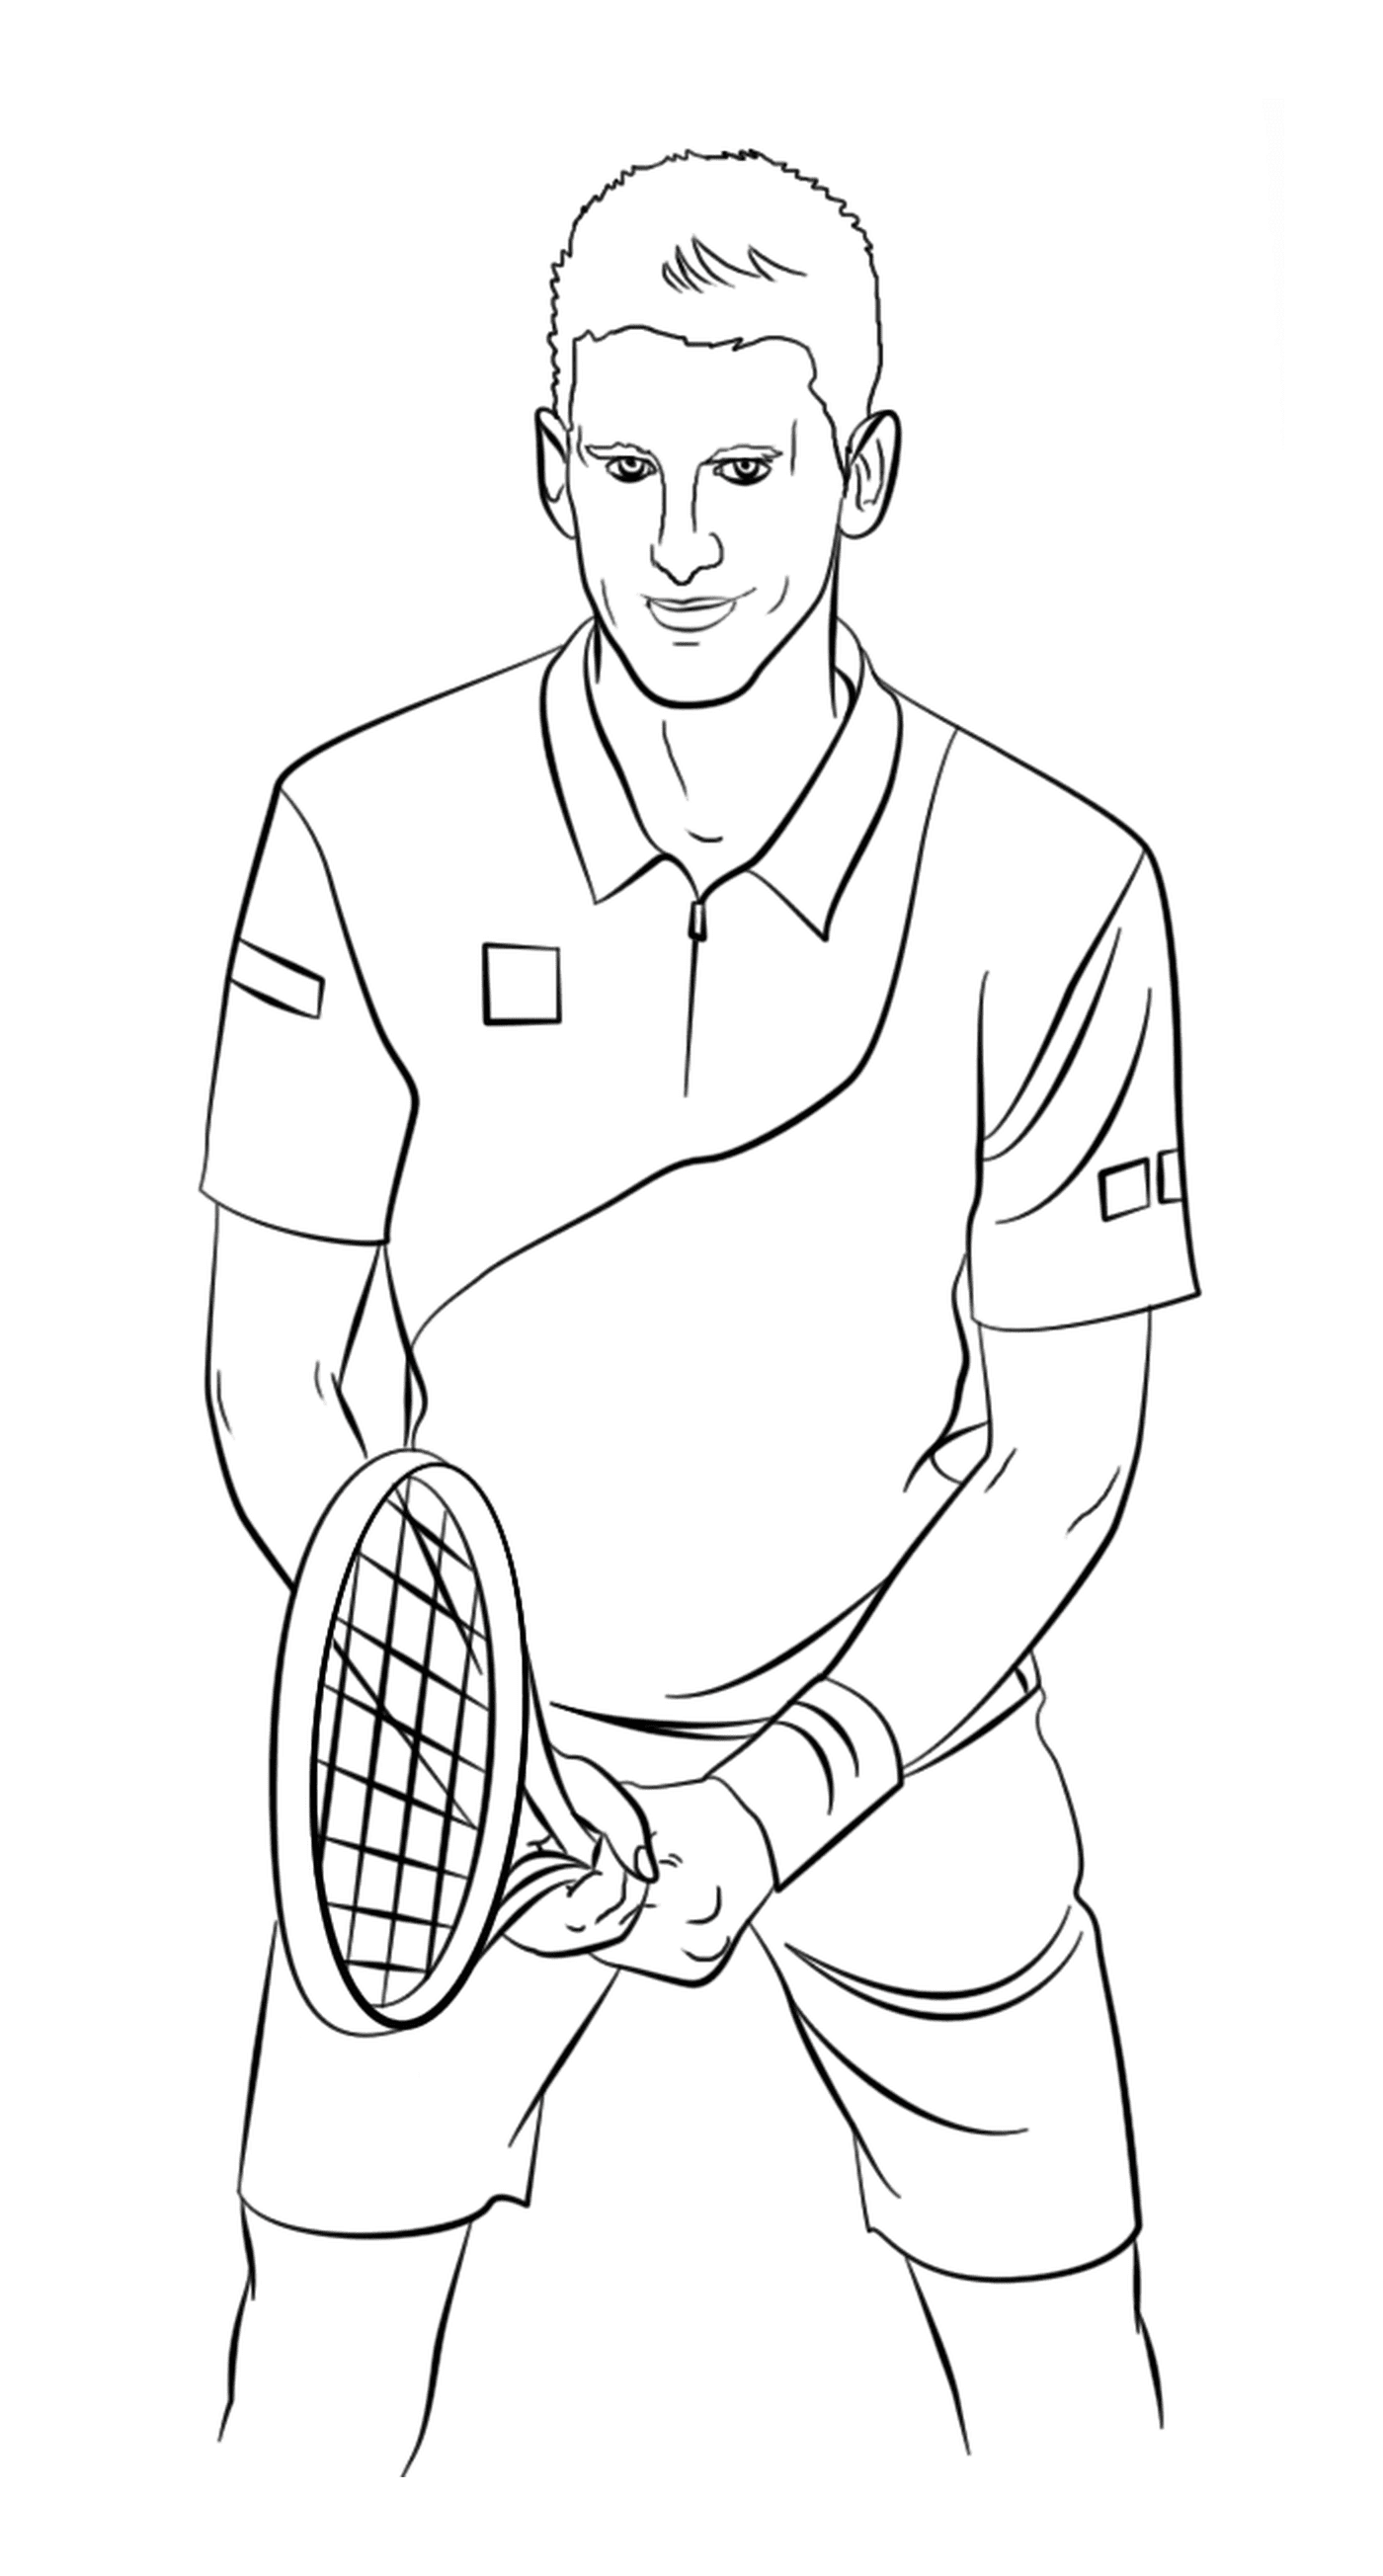  Un tennista professionista 